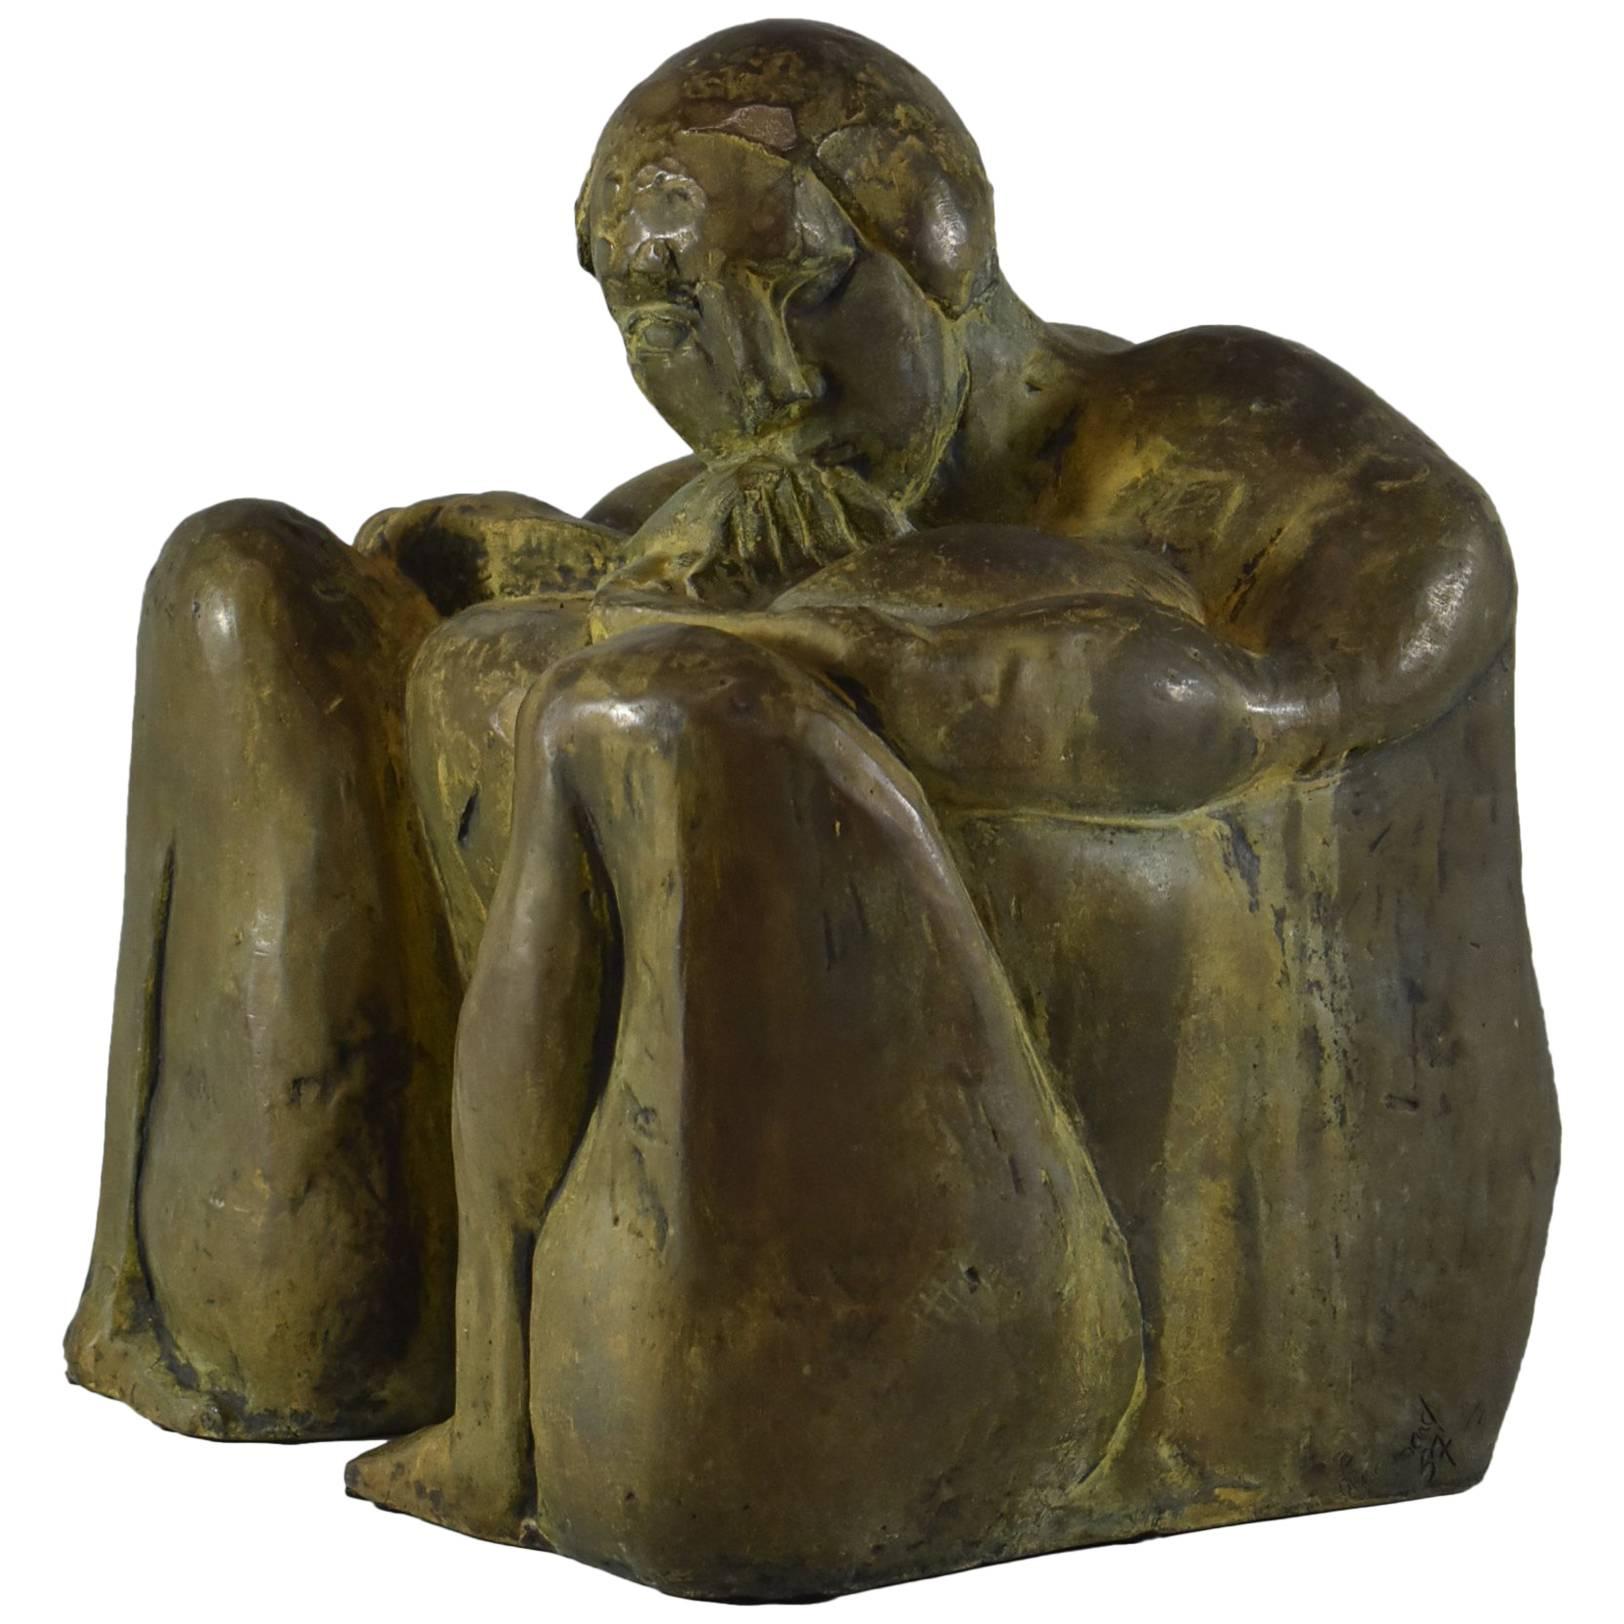 Modern Bronze Sculpture Signed and Numbered by Leonard Schwartz "57" 2/7